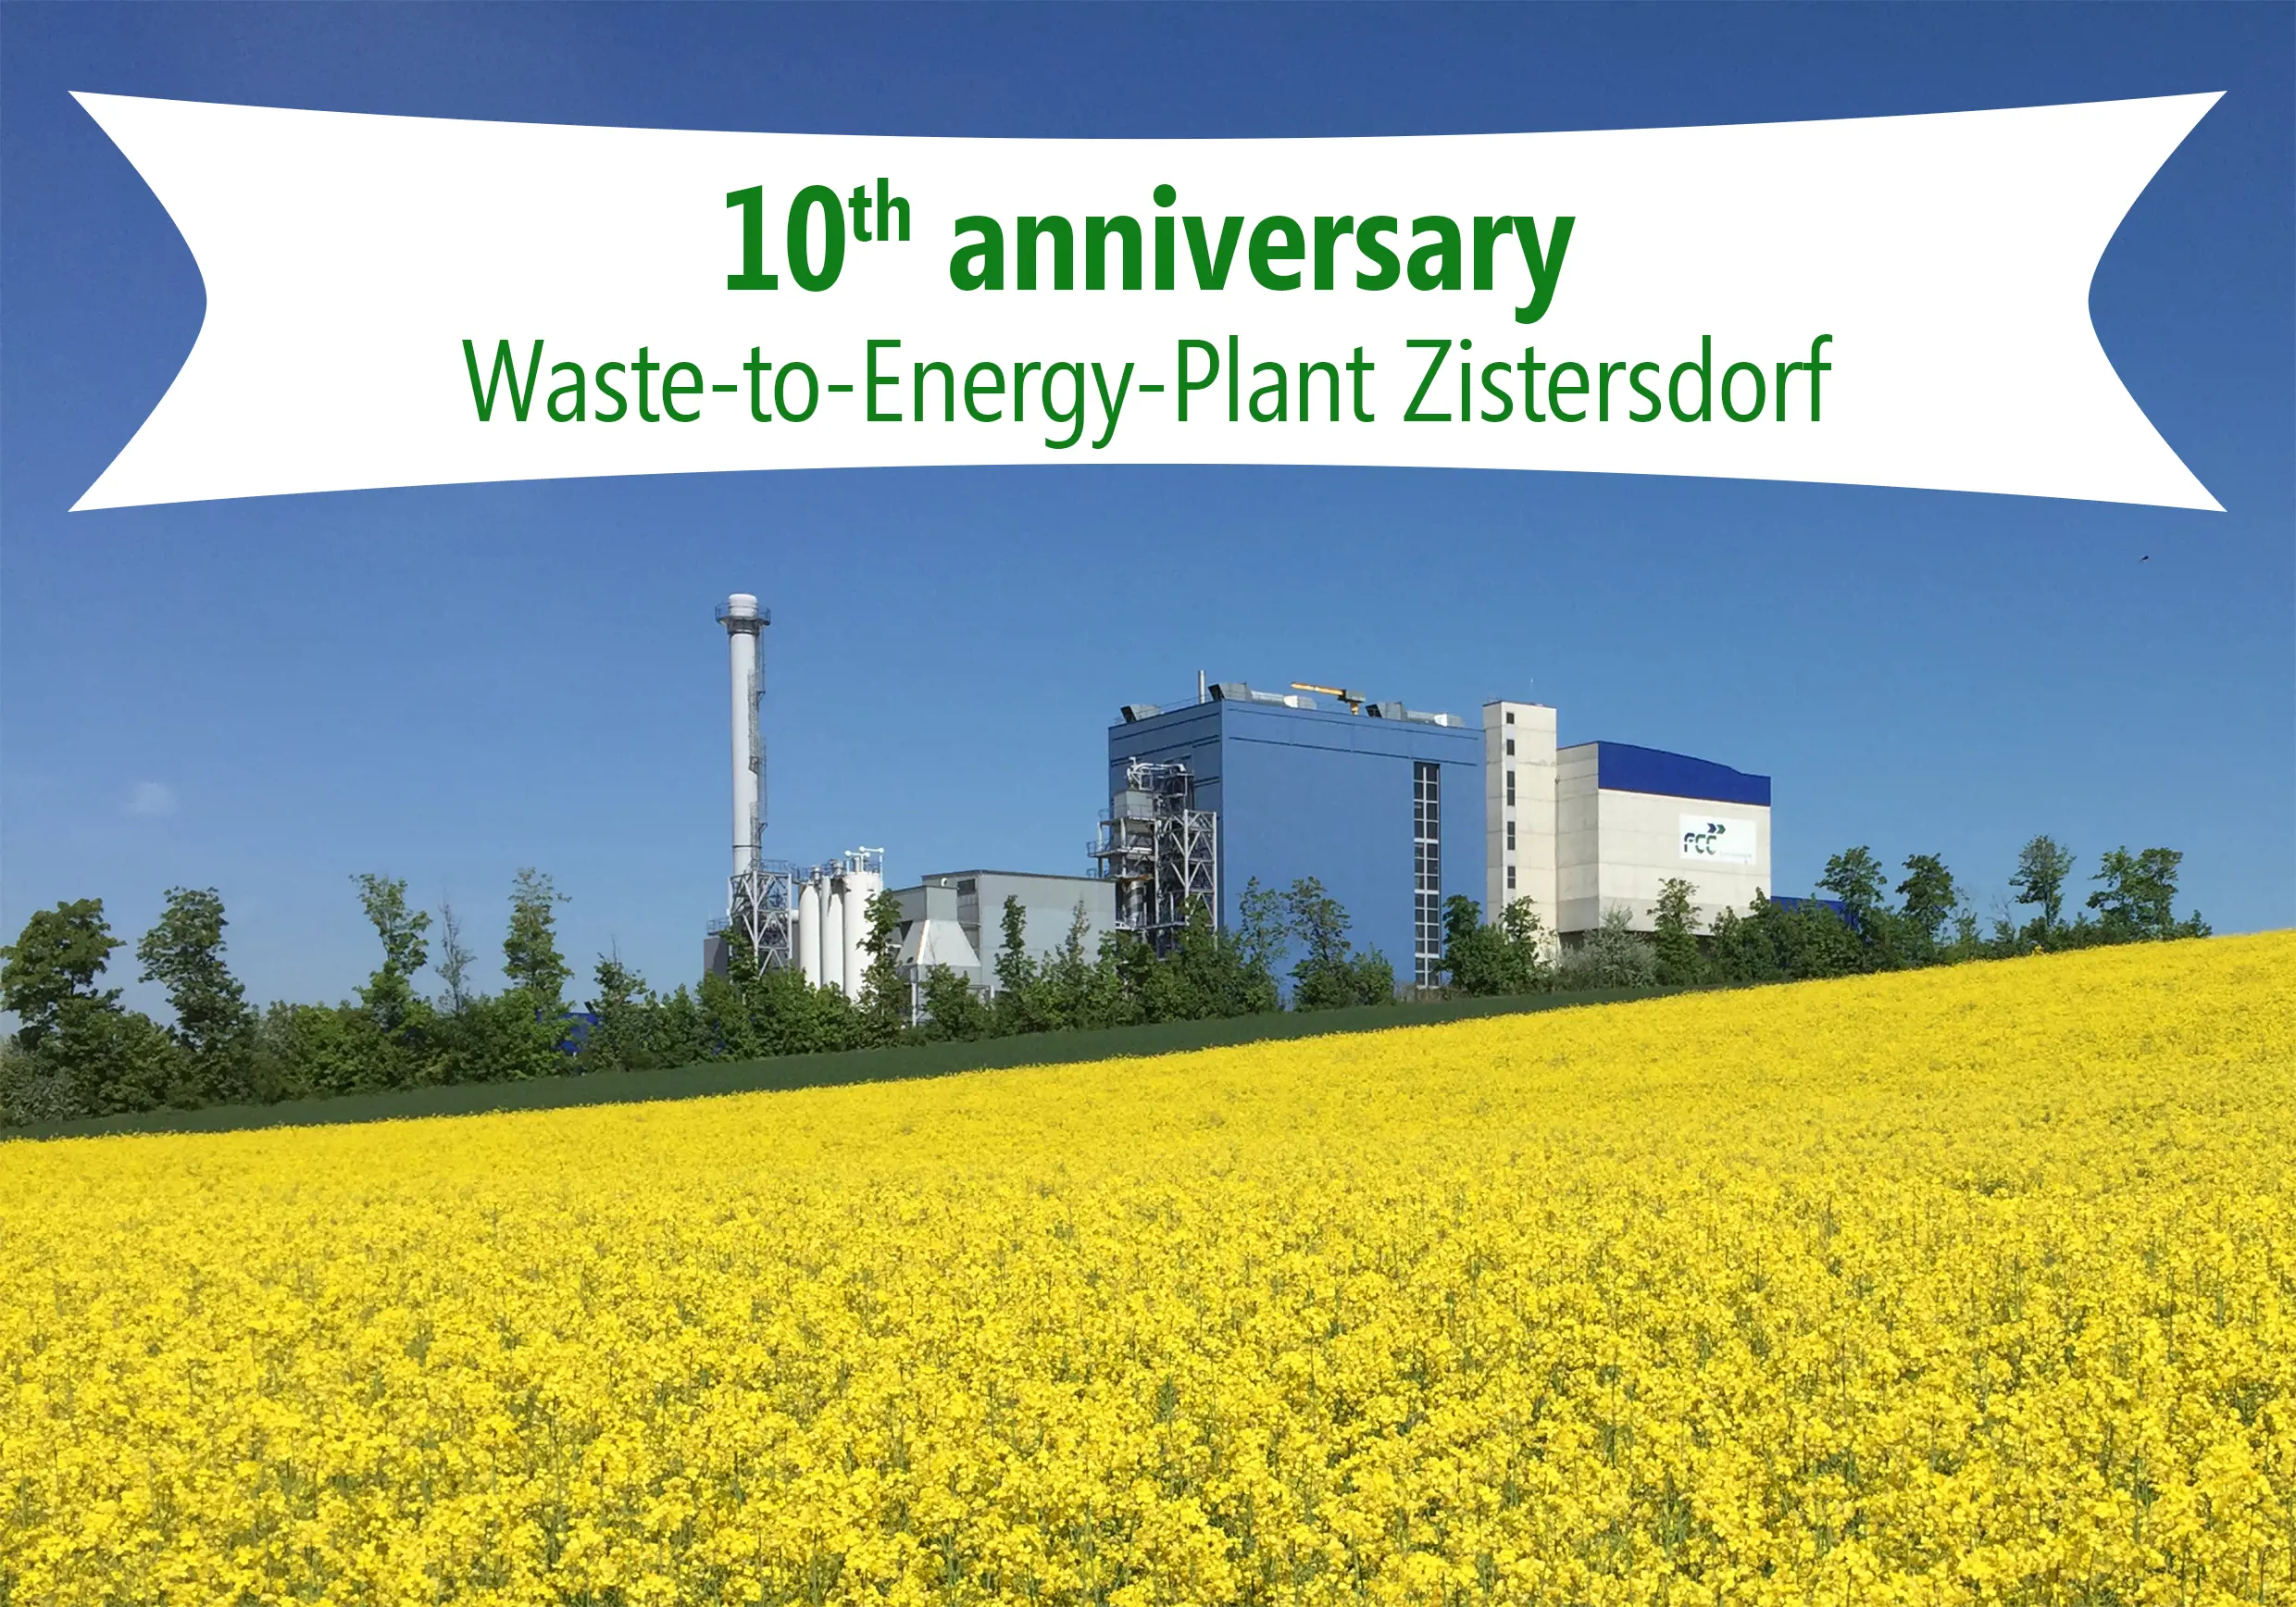 10th anniversary WtE-Plant Zistersdorf - Full power ahead